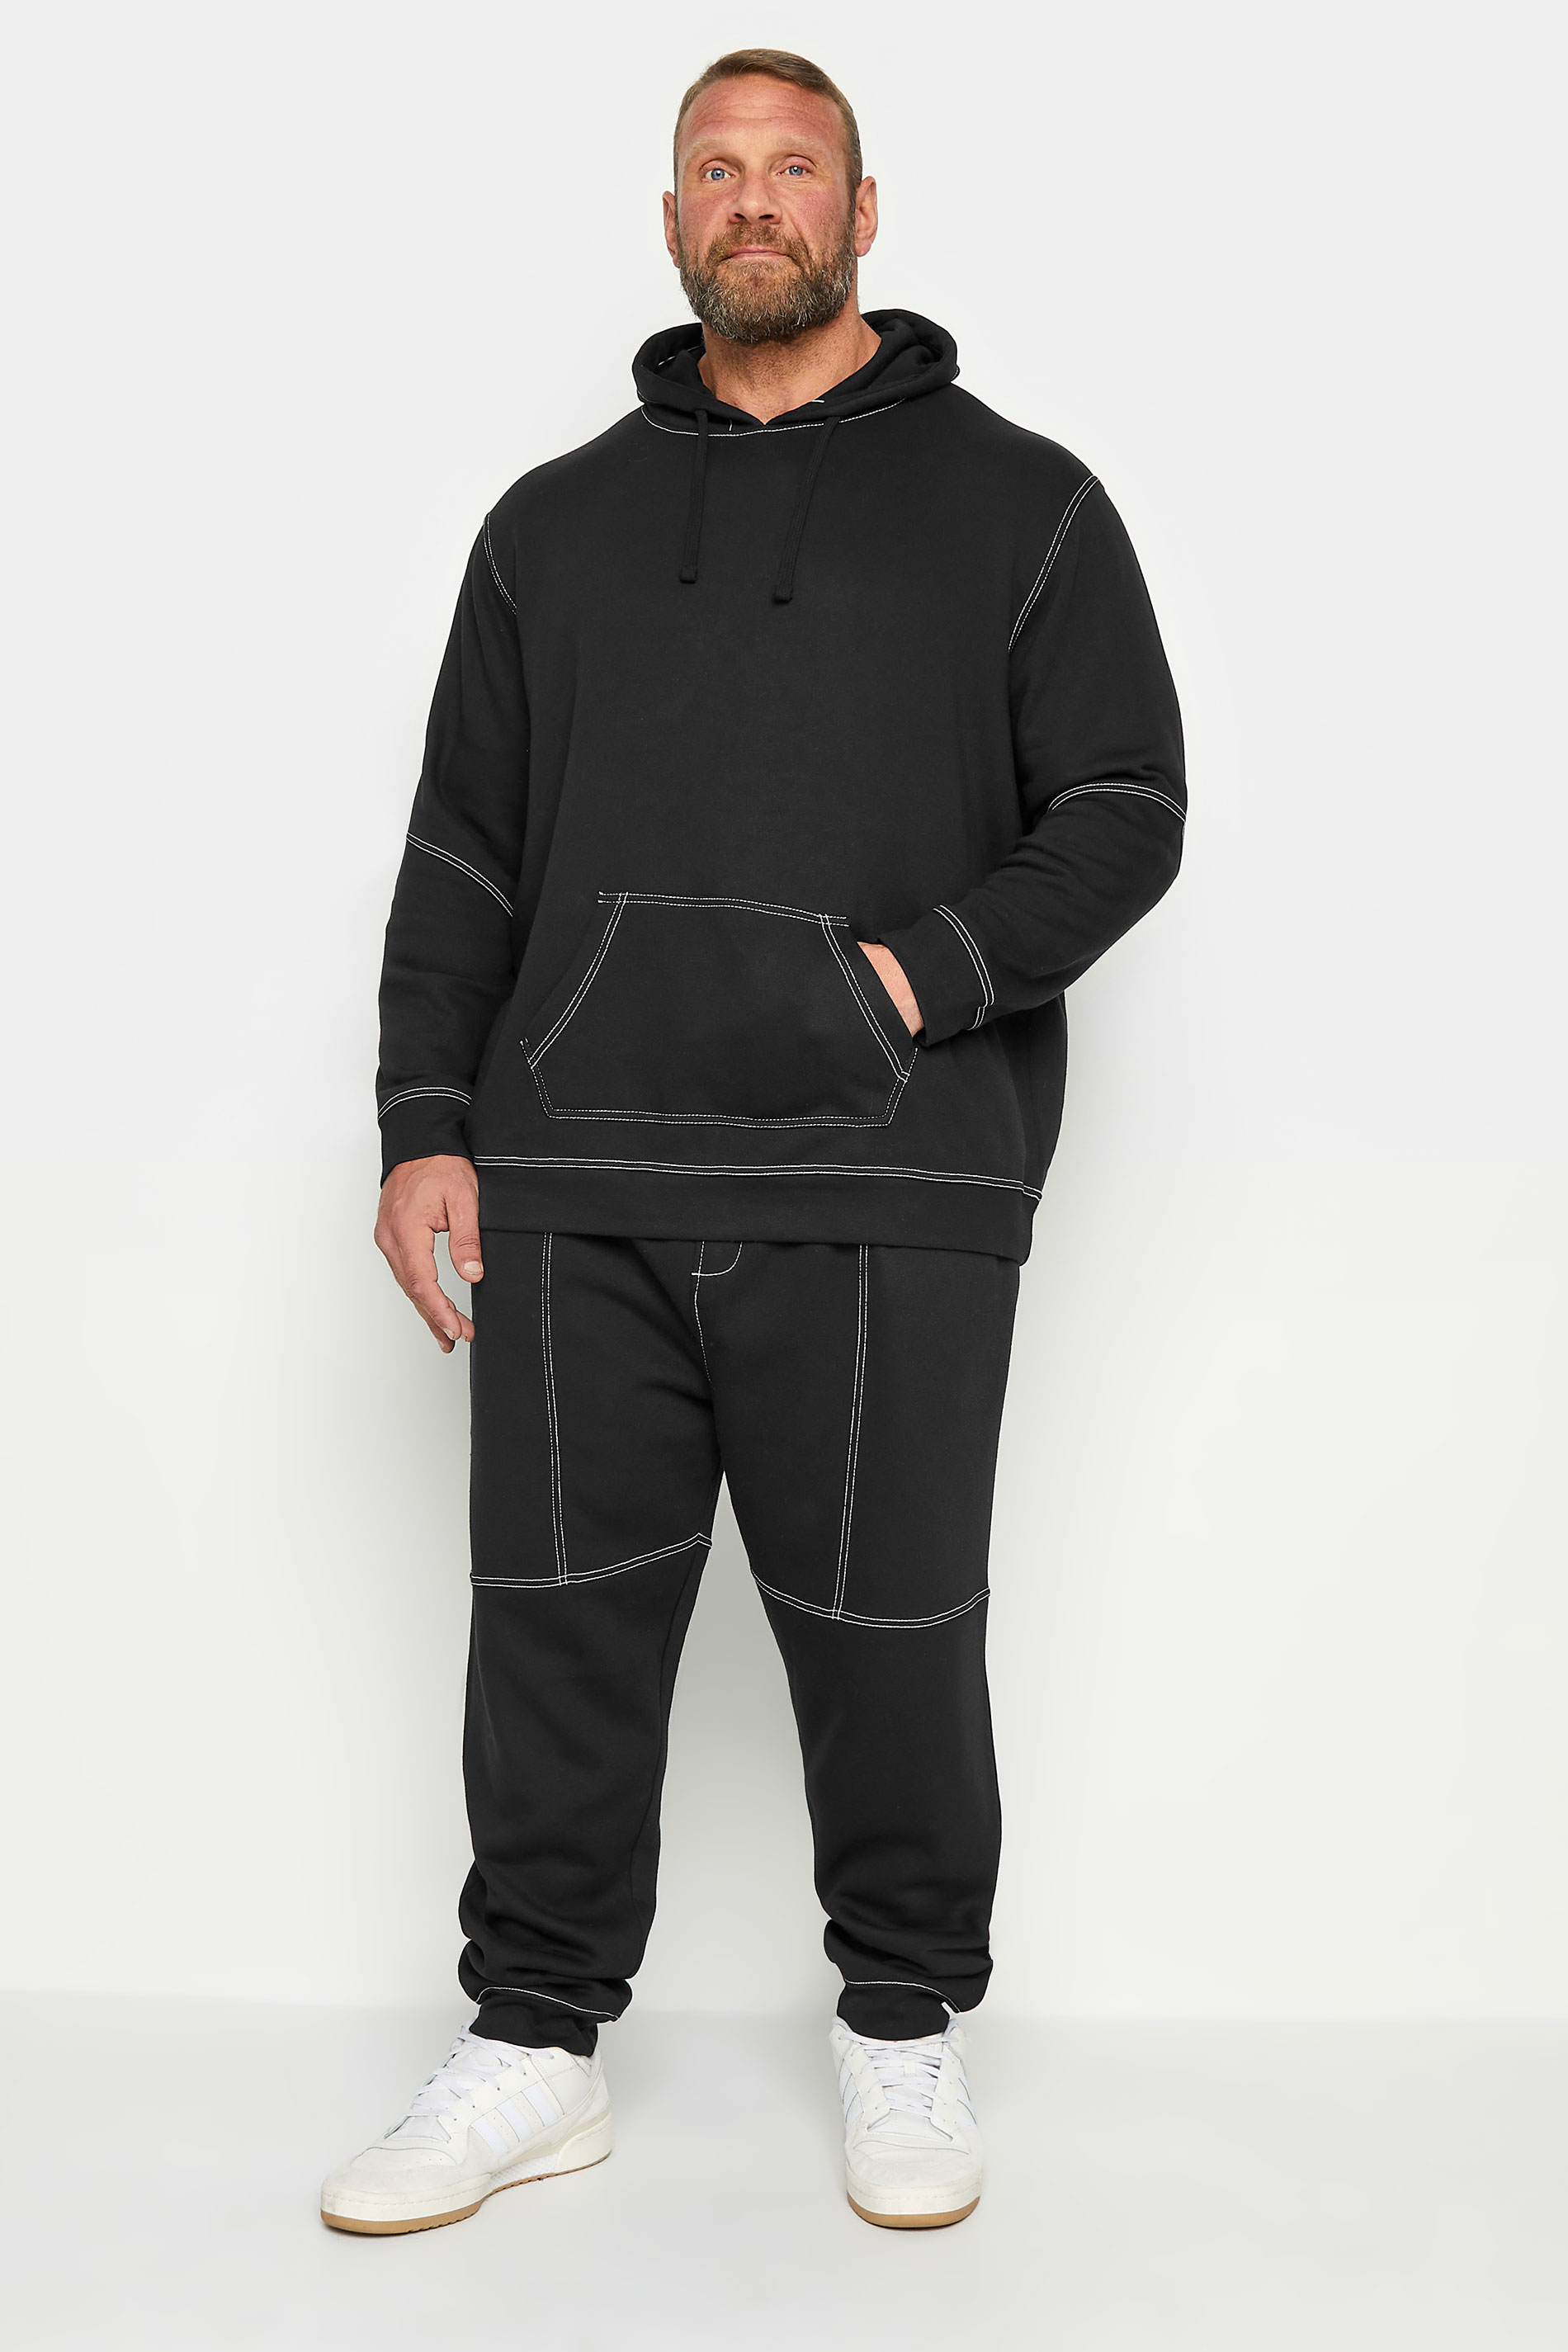 BadRhino Black Contrast Stitch Sweatshirt | BadRhino 3